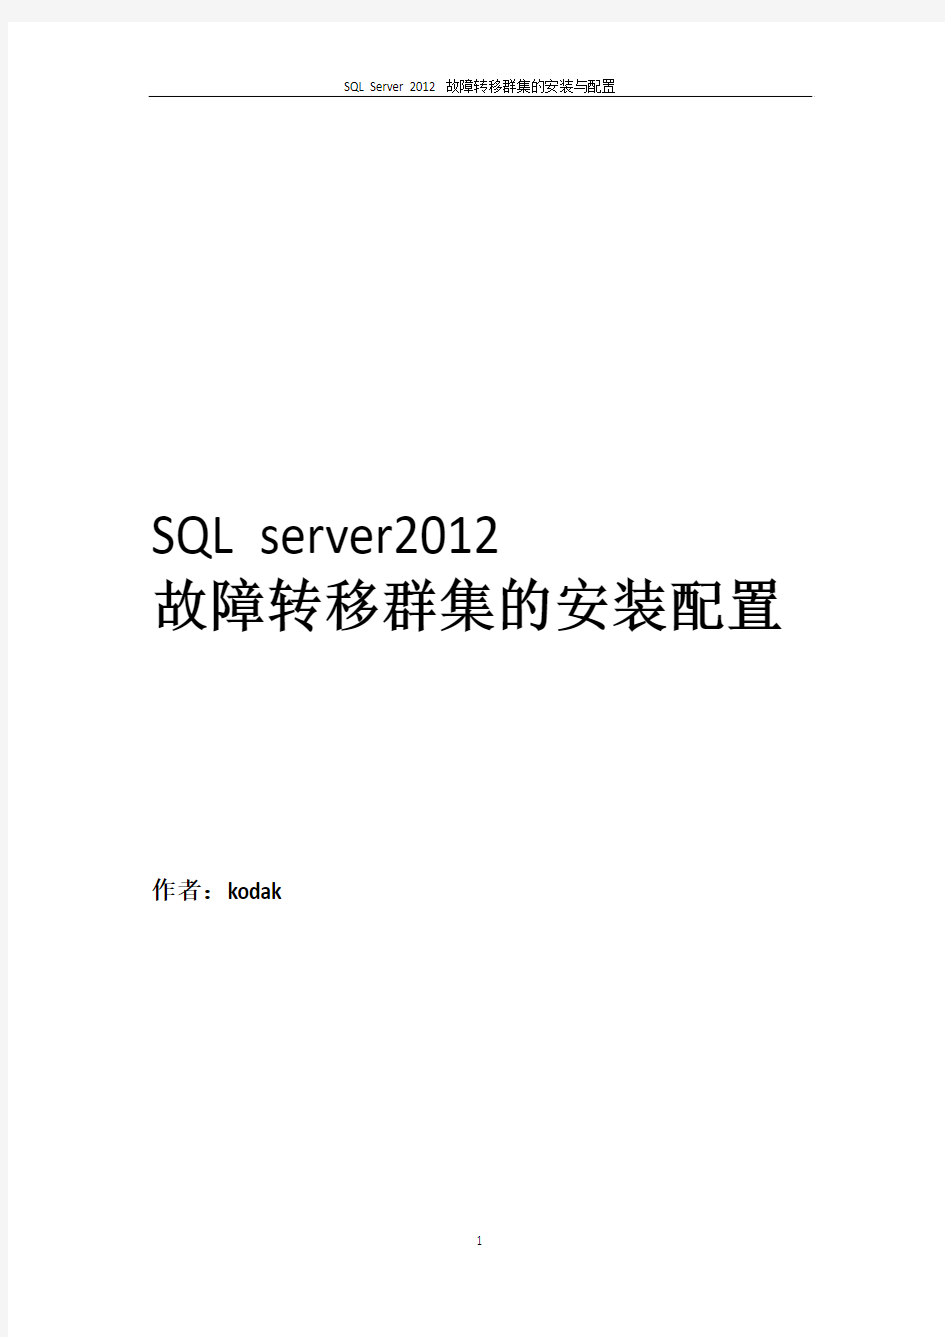 SQL server 2012故障转移群集的安装与配置